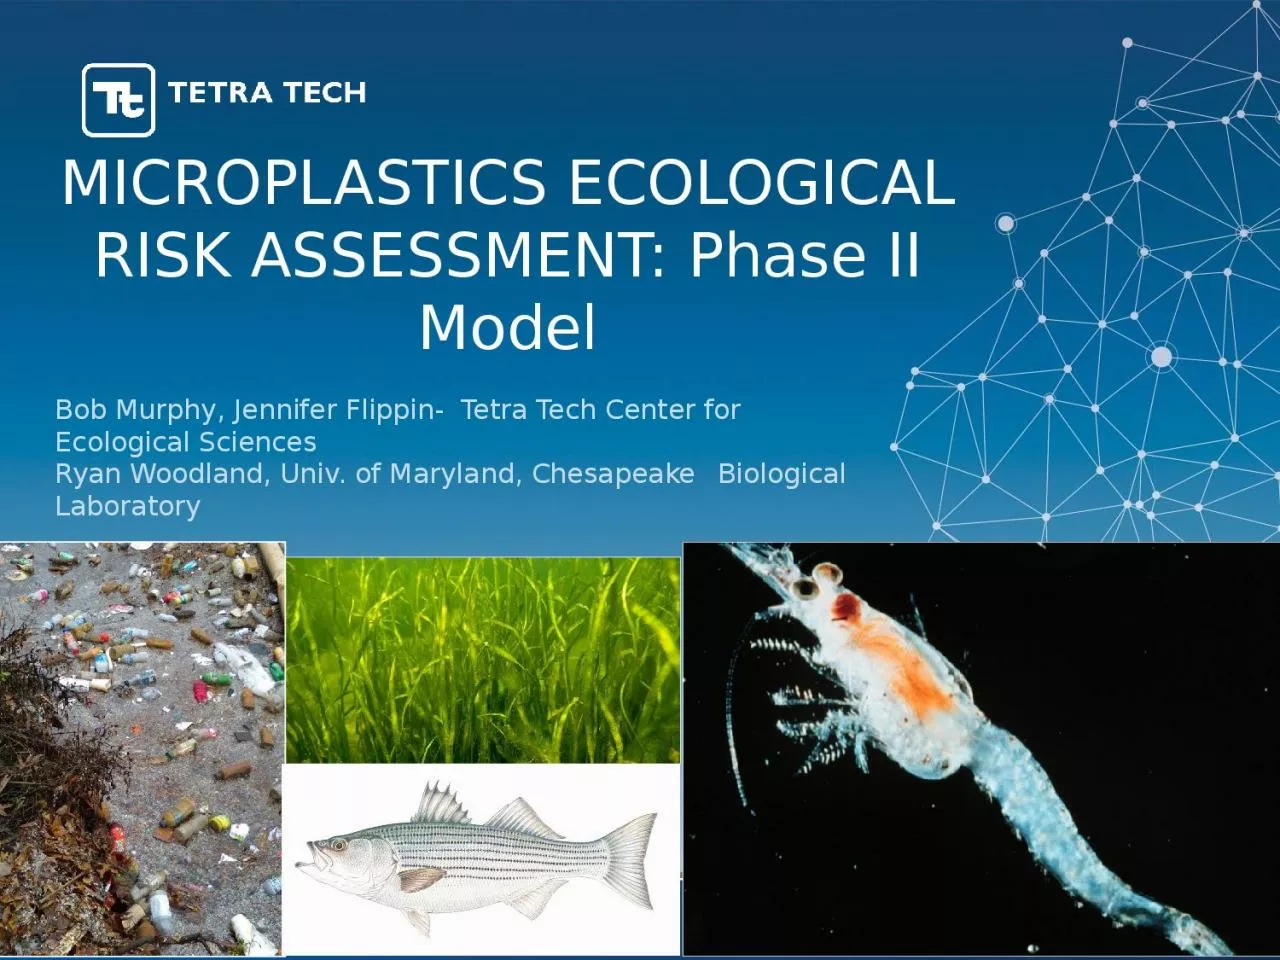 MICROPLASTICS ECOLOGICAL RISK ASSESSMENT: Phase II Model